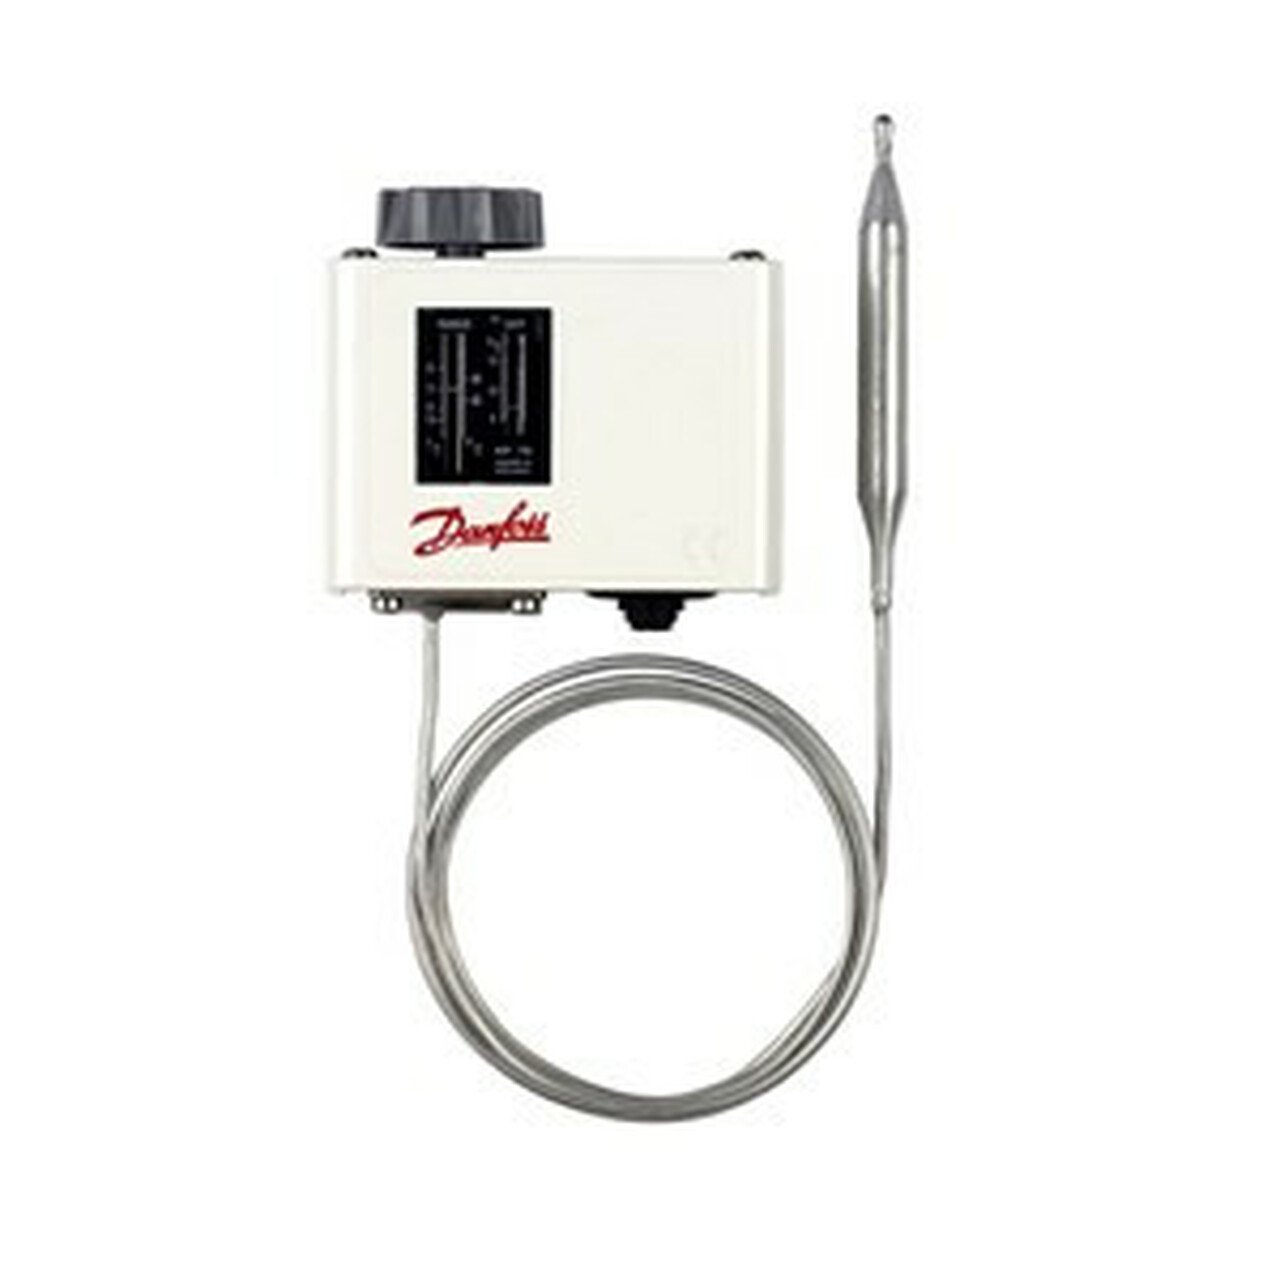 Differential thermostat DANFOSS KP71,060L1115, field calibration -5... +20°C, capillary tube 2000 mm, sensor ø 9.5x115 mm